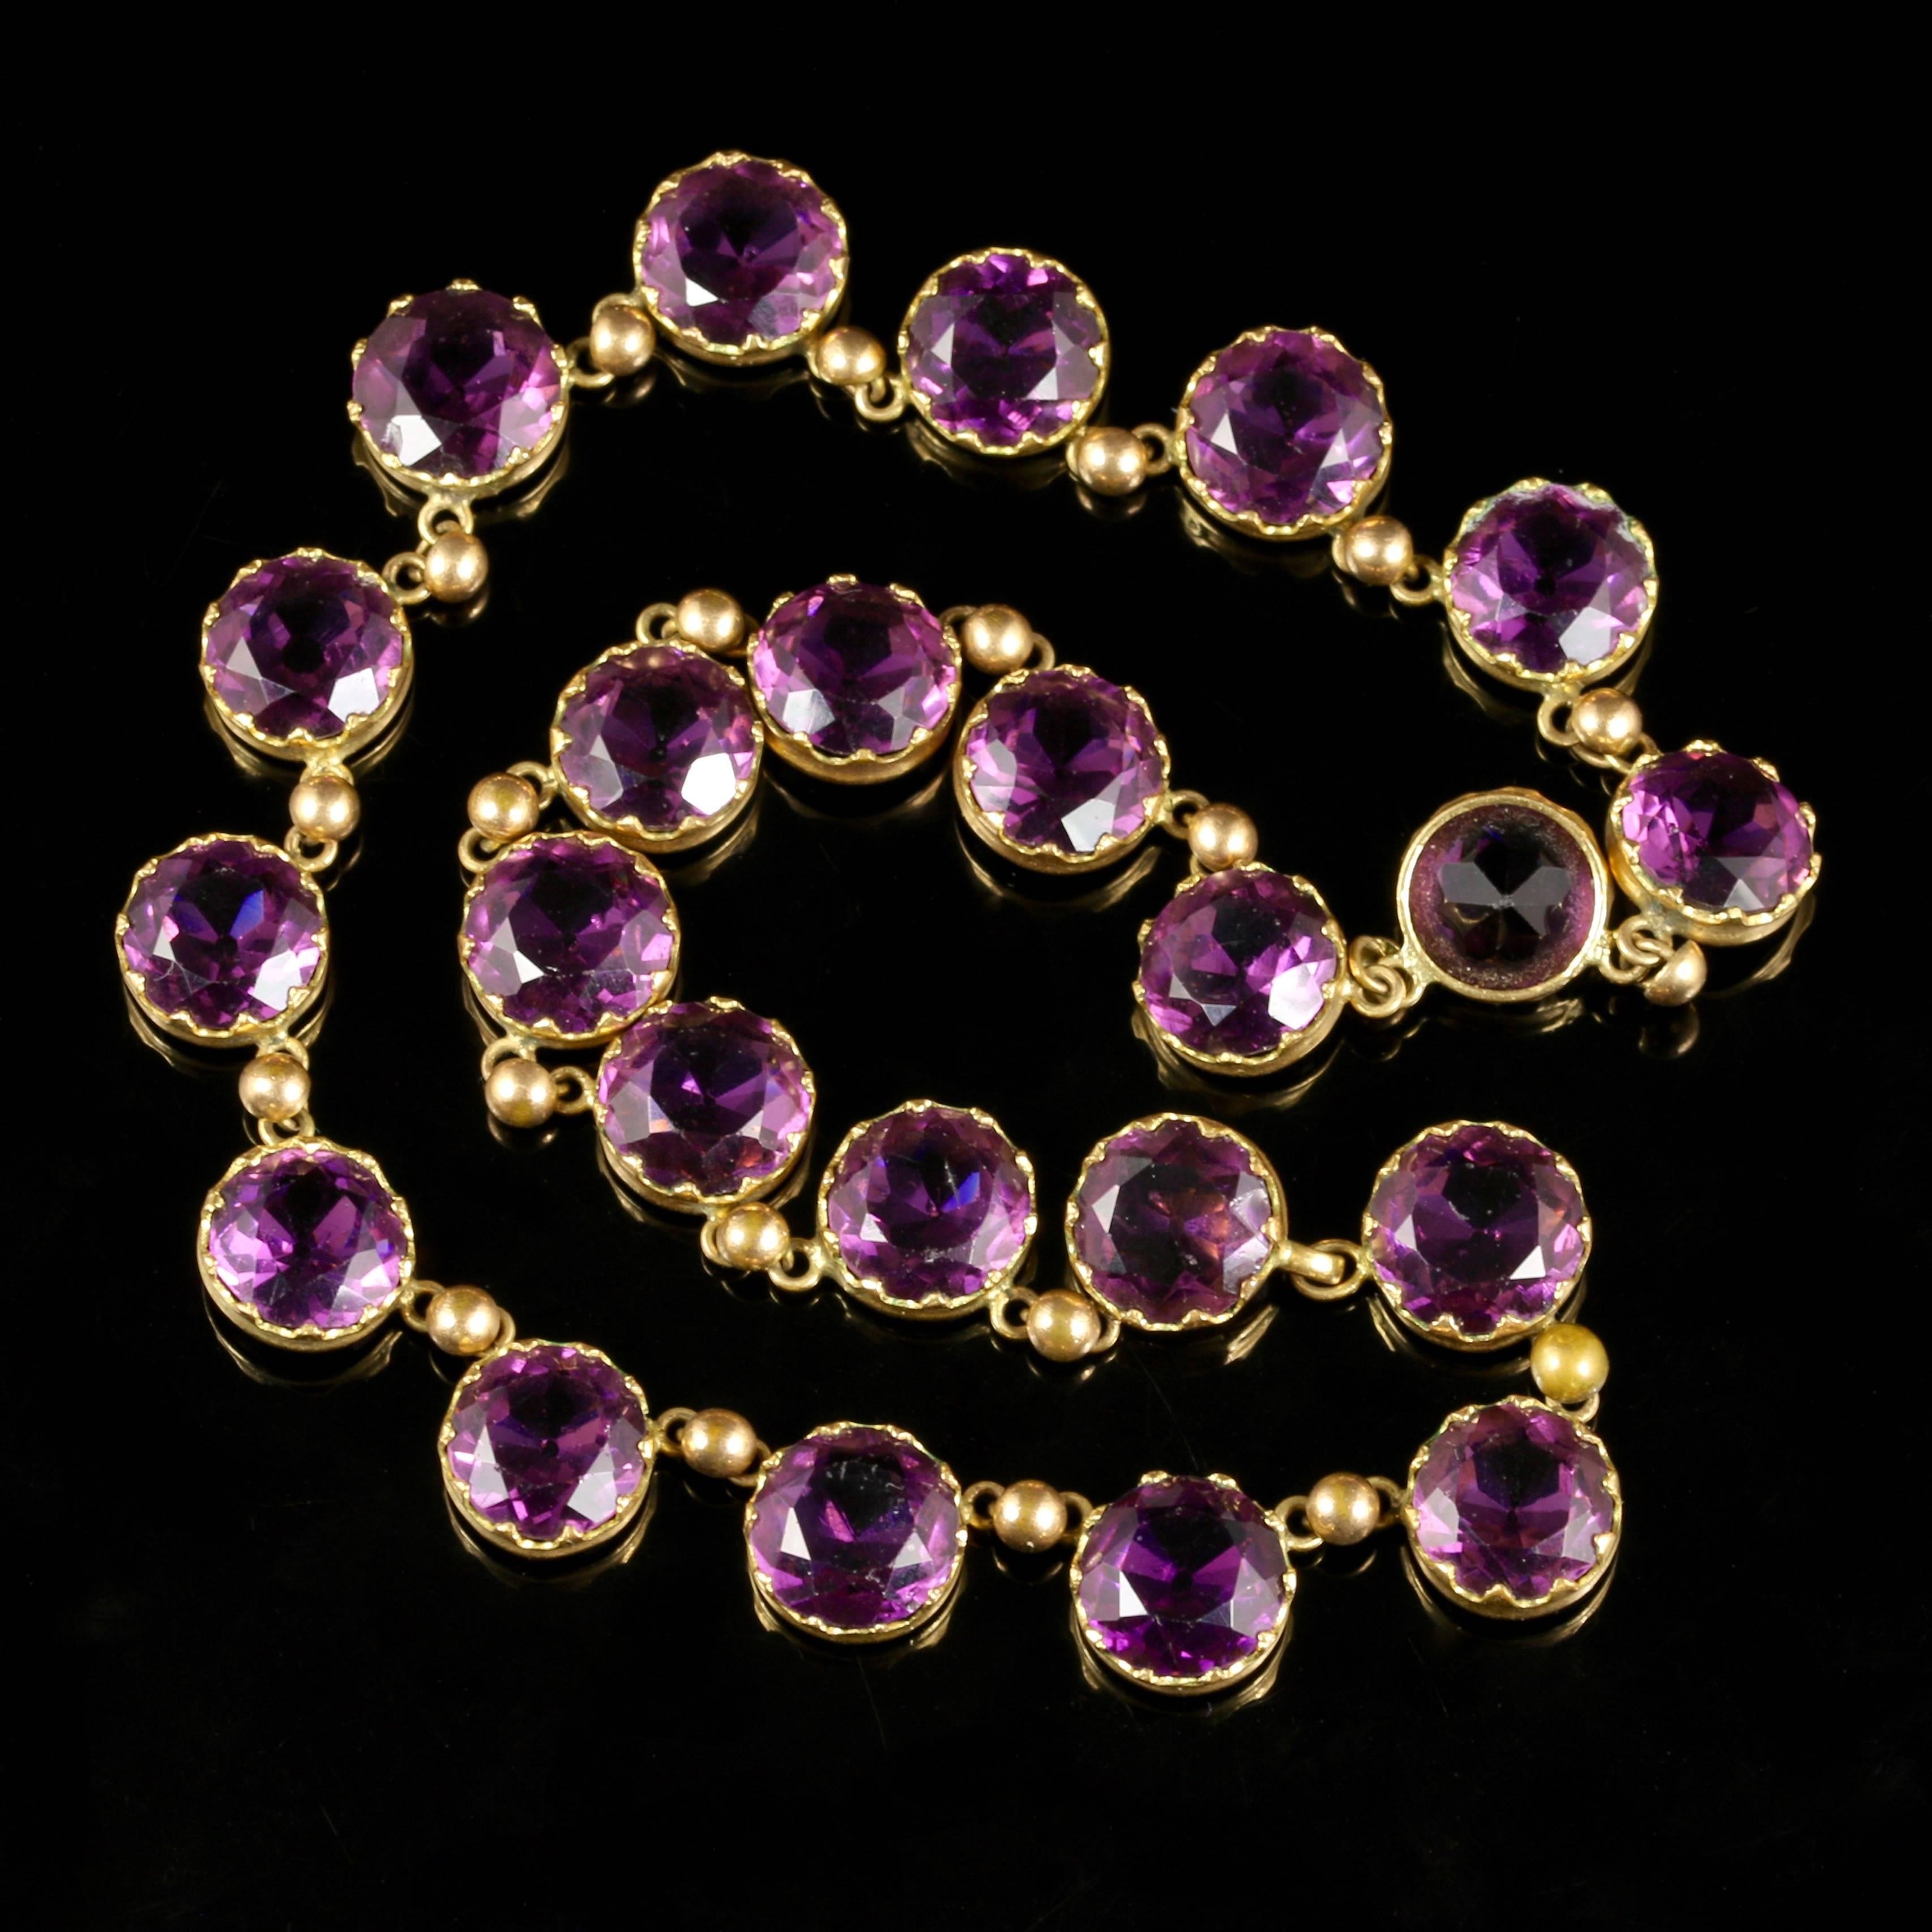 Antique Victorian Purple Paste Necklace, circa 1860 For Sale 1